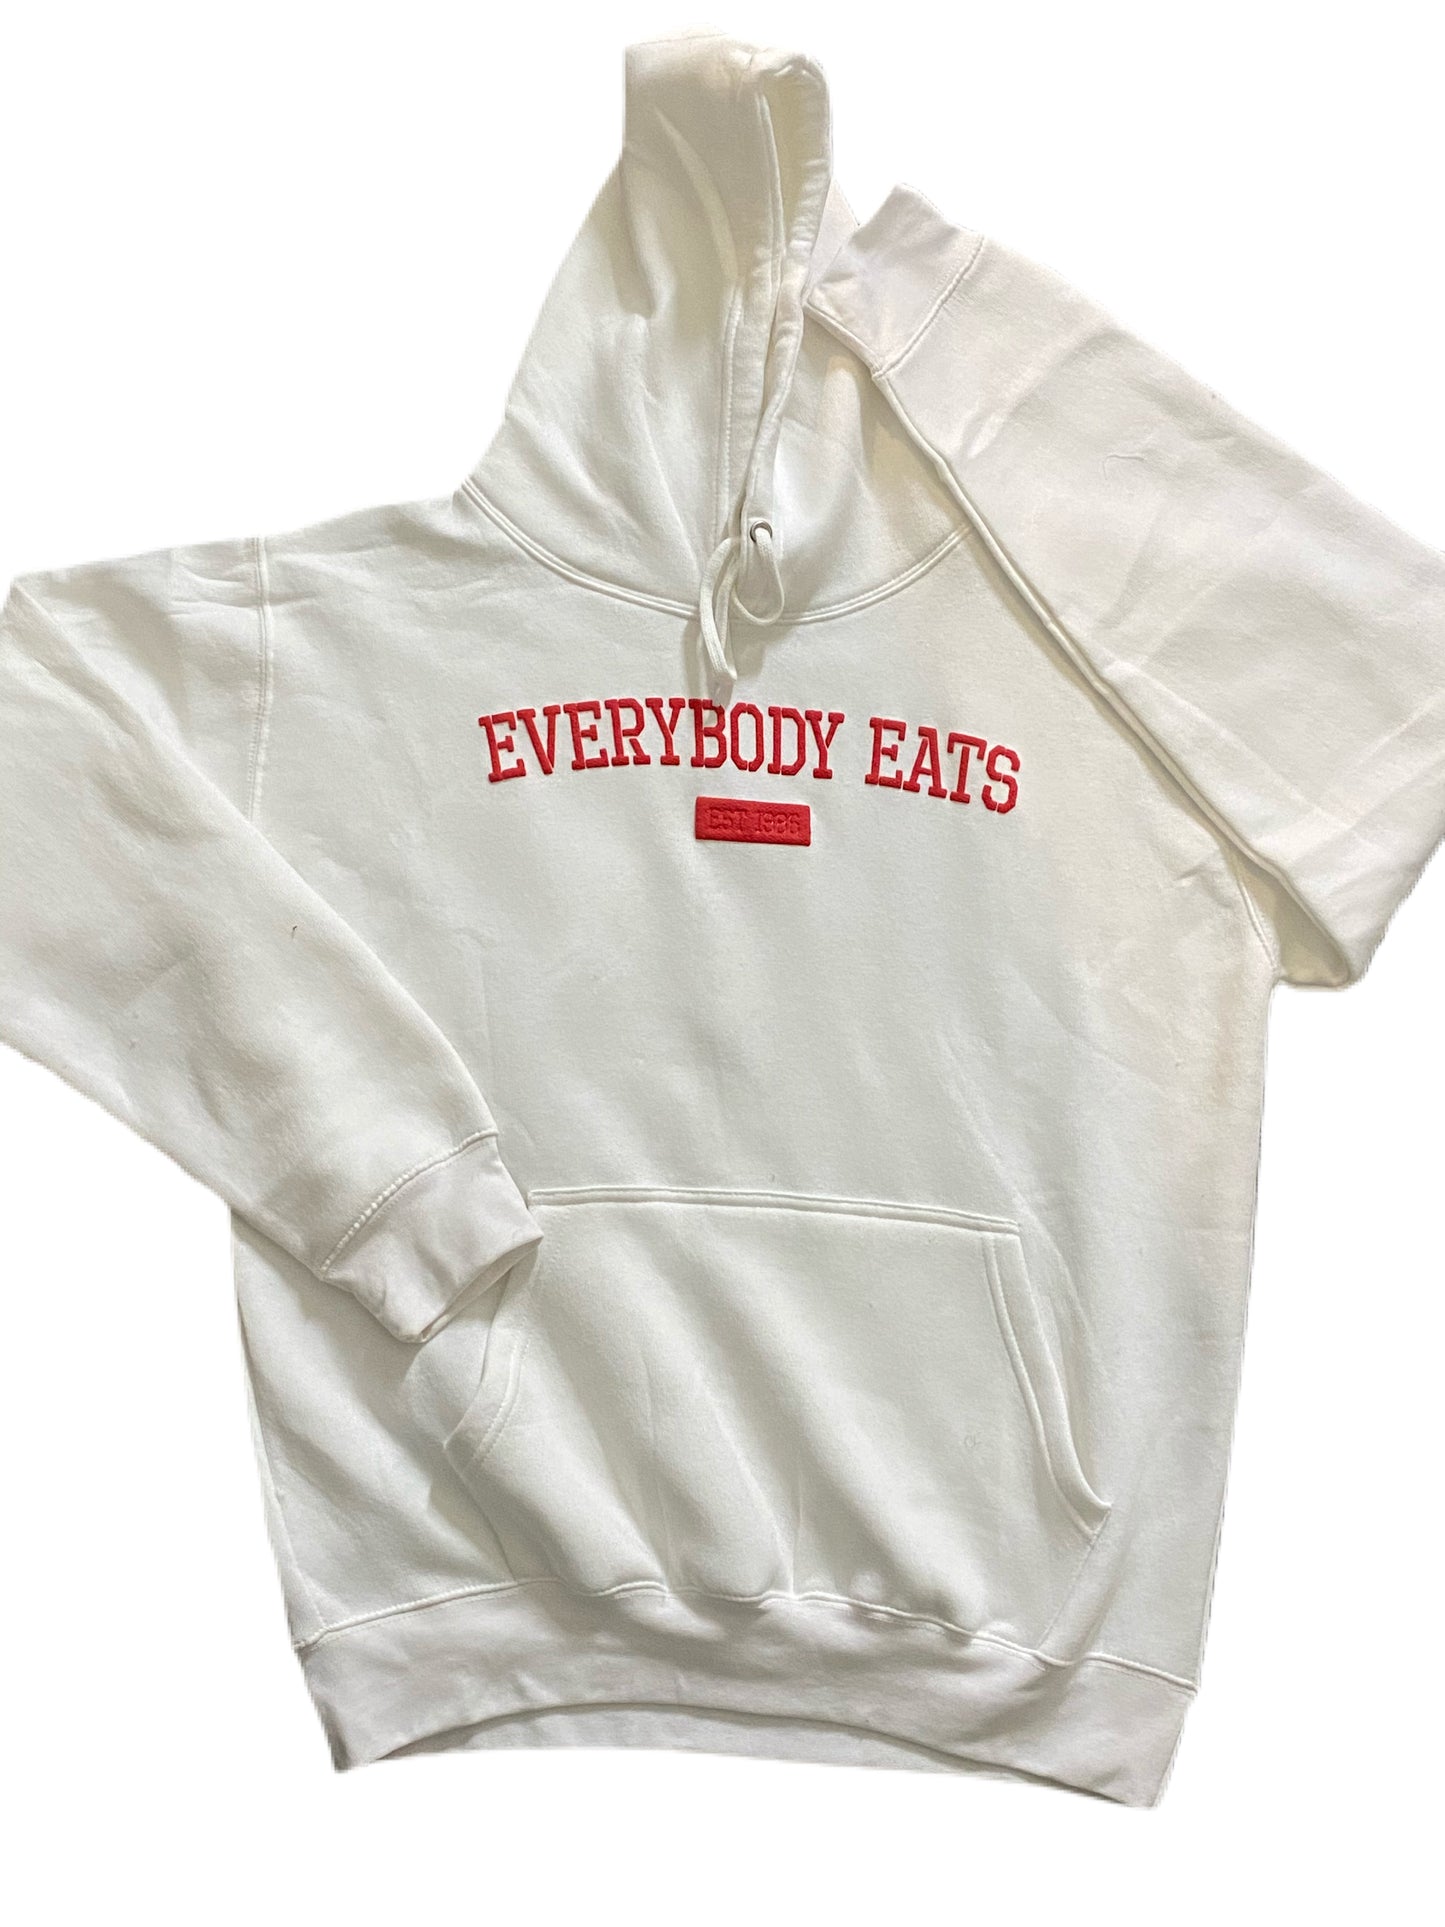 "Everybody Eats" - "Mitch Money" Edition